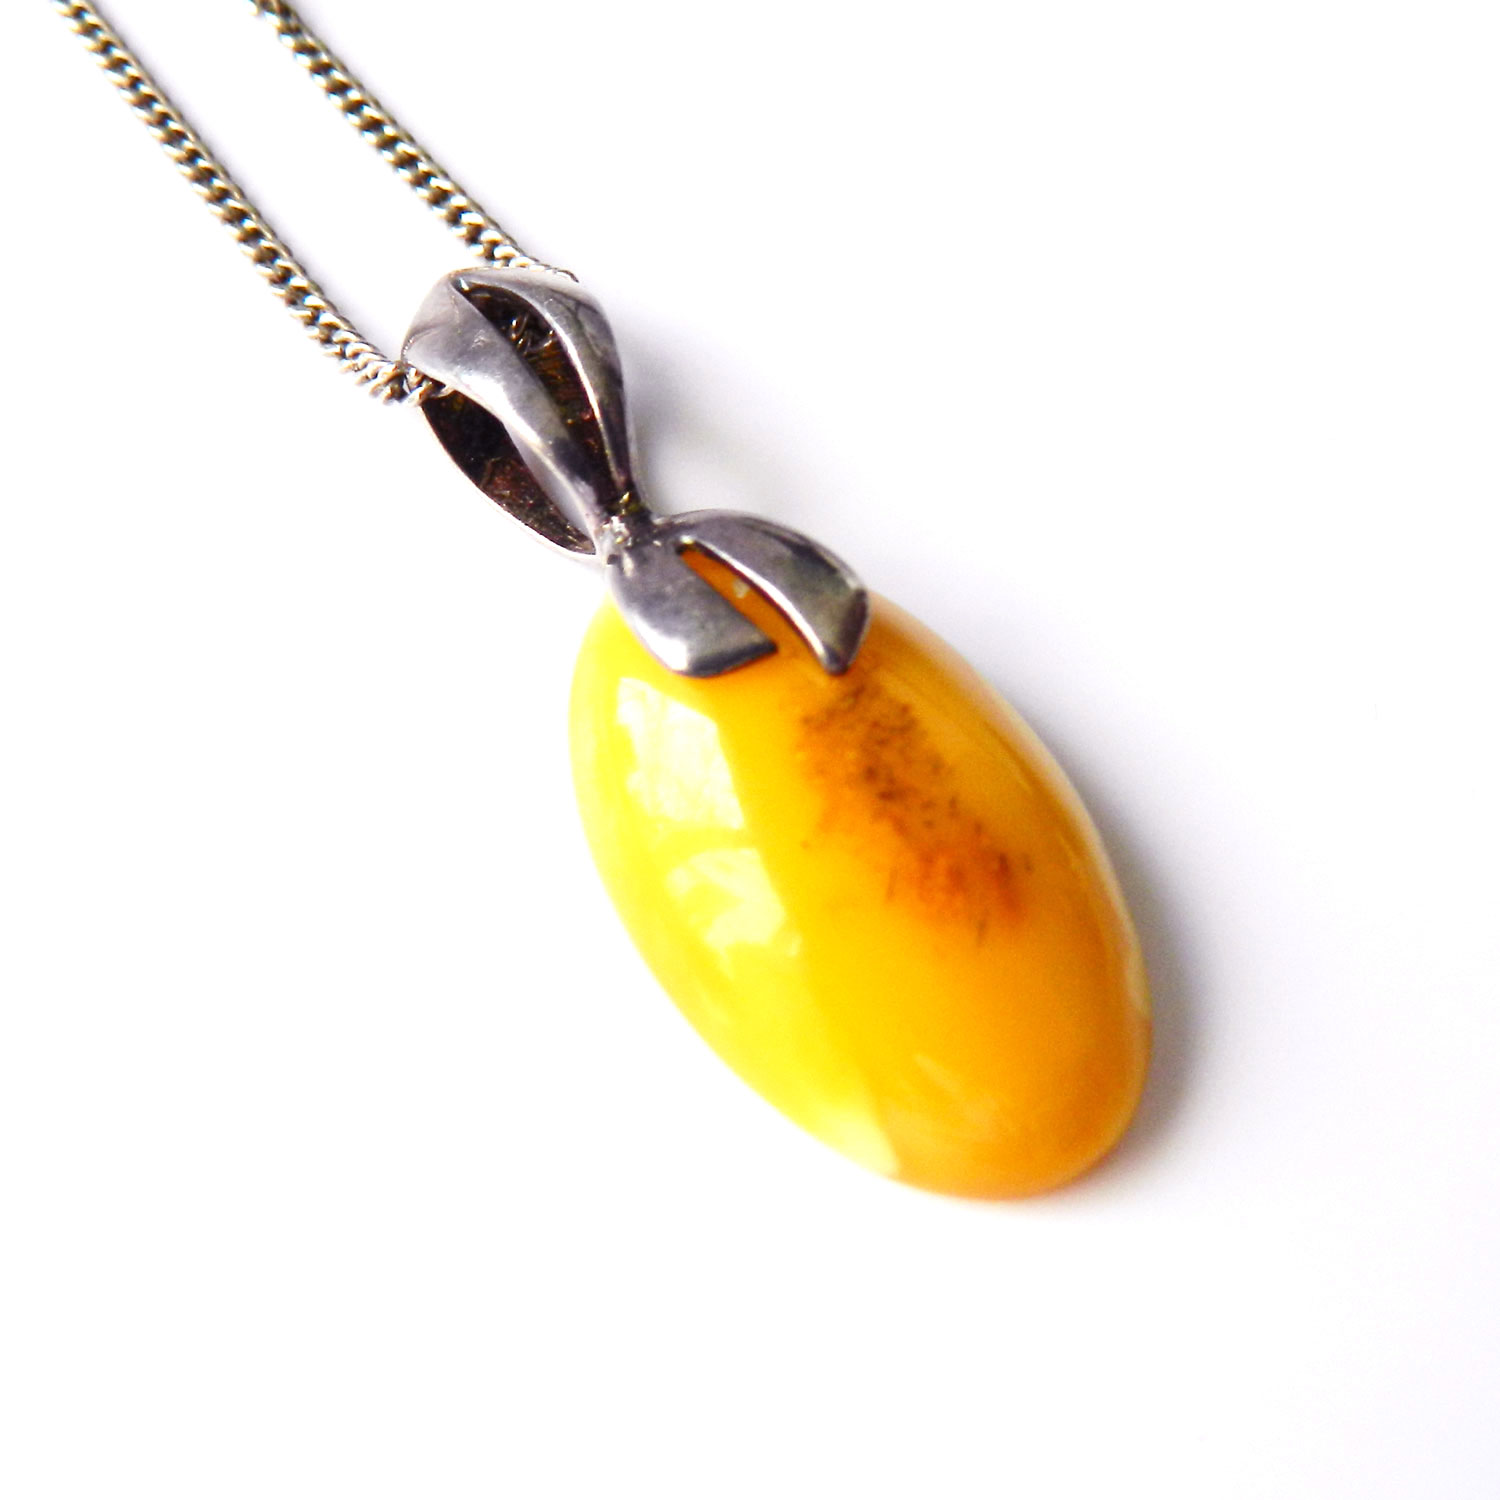 Egg yolk amber pendant necklace